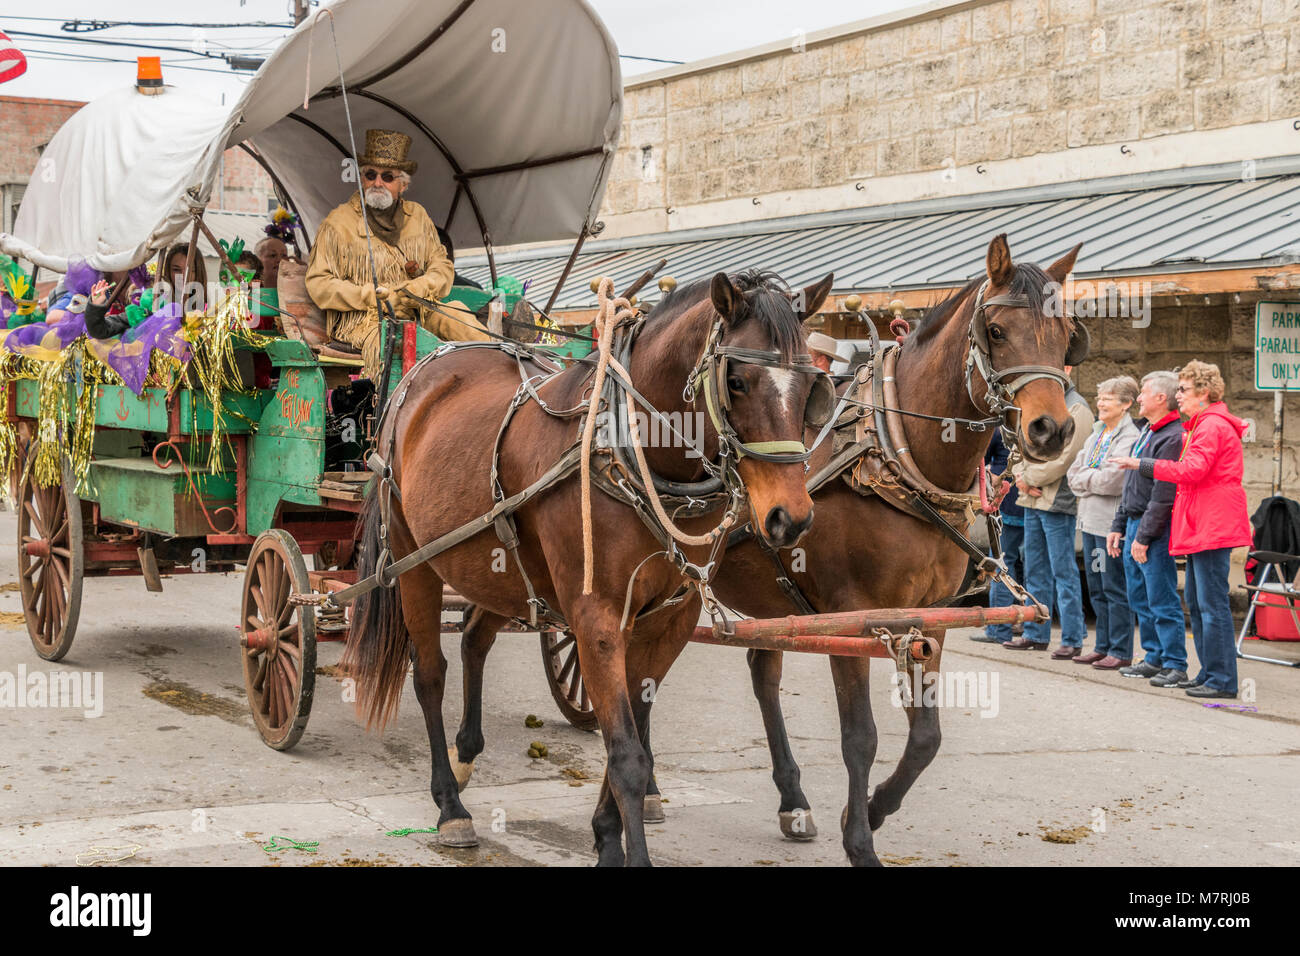 Scenes from the 14th Annual Cowboy Mardi Gras in Bandera, Texas